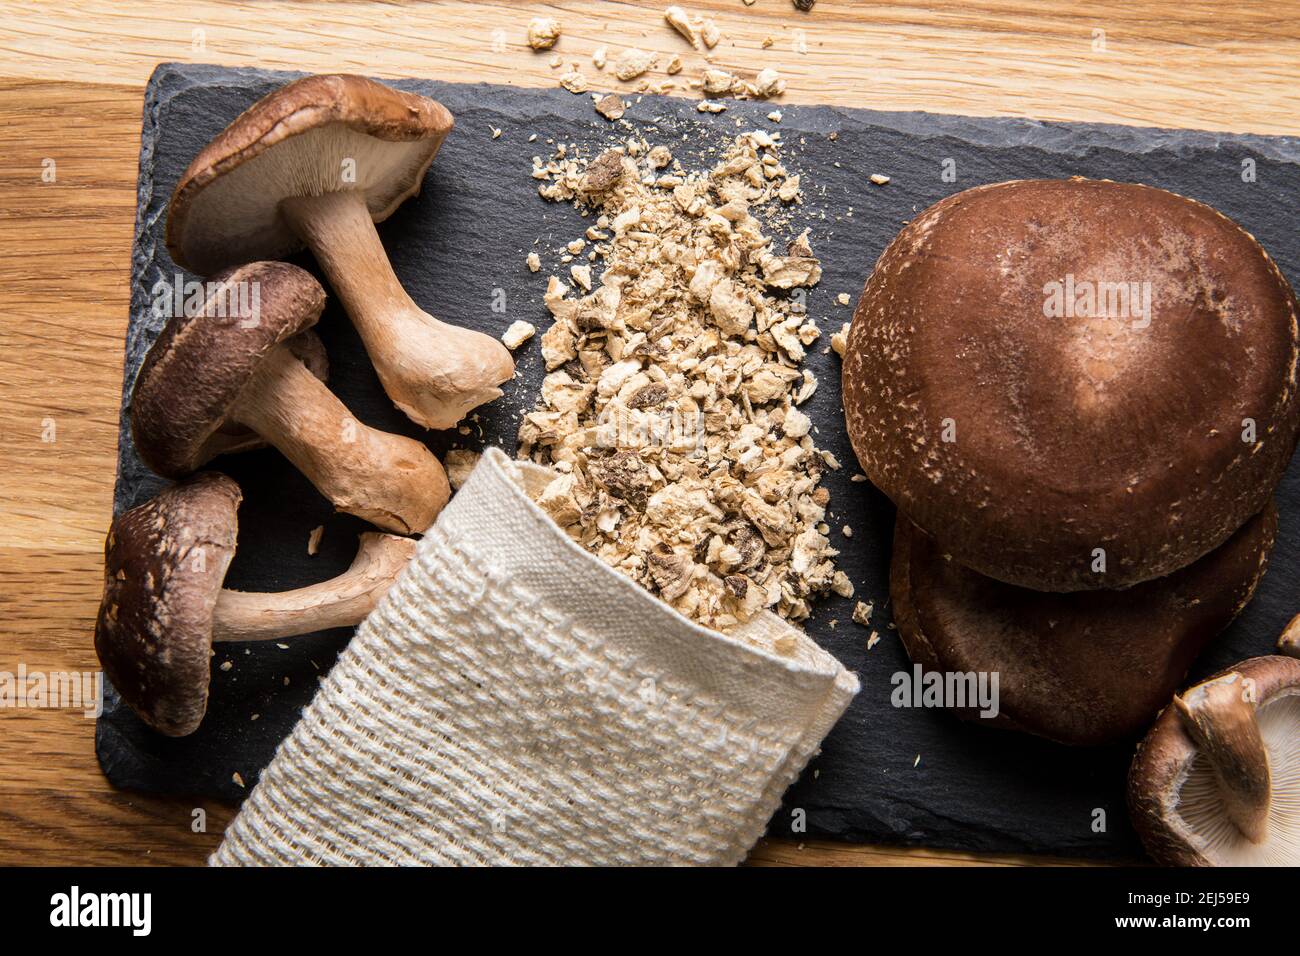 Flat lay view of dry powder made of shiitake mushrooms, Lentinula edodes. Food ingredient on black stone cutting board with fresh shiitake mushrooms Stock Photo